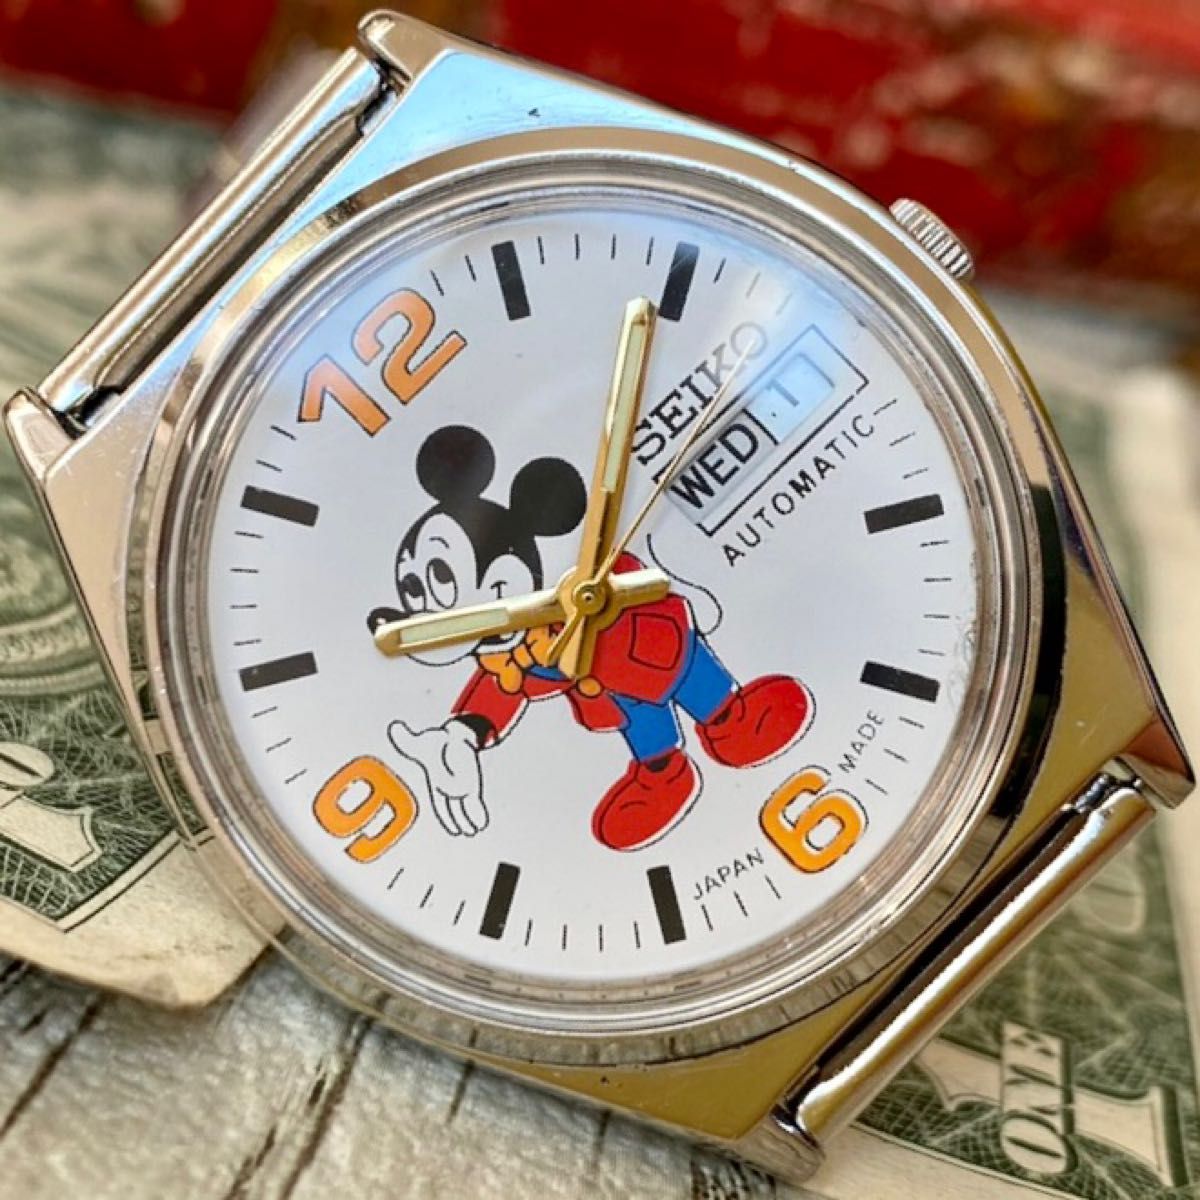 Yahoo!オークション -「セイコーレトロ腕時計」の落札相場・落札価格